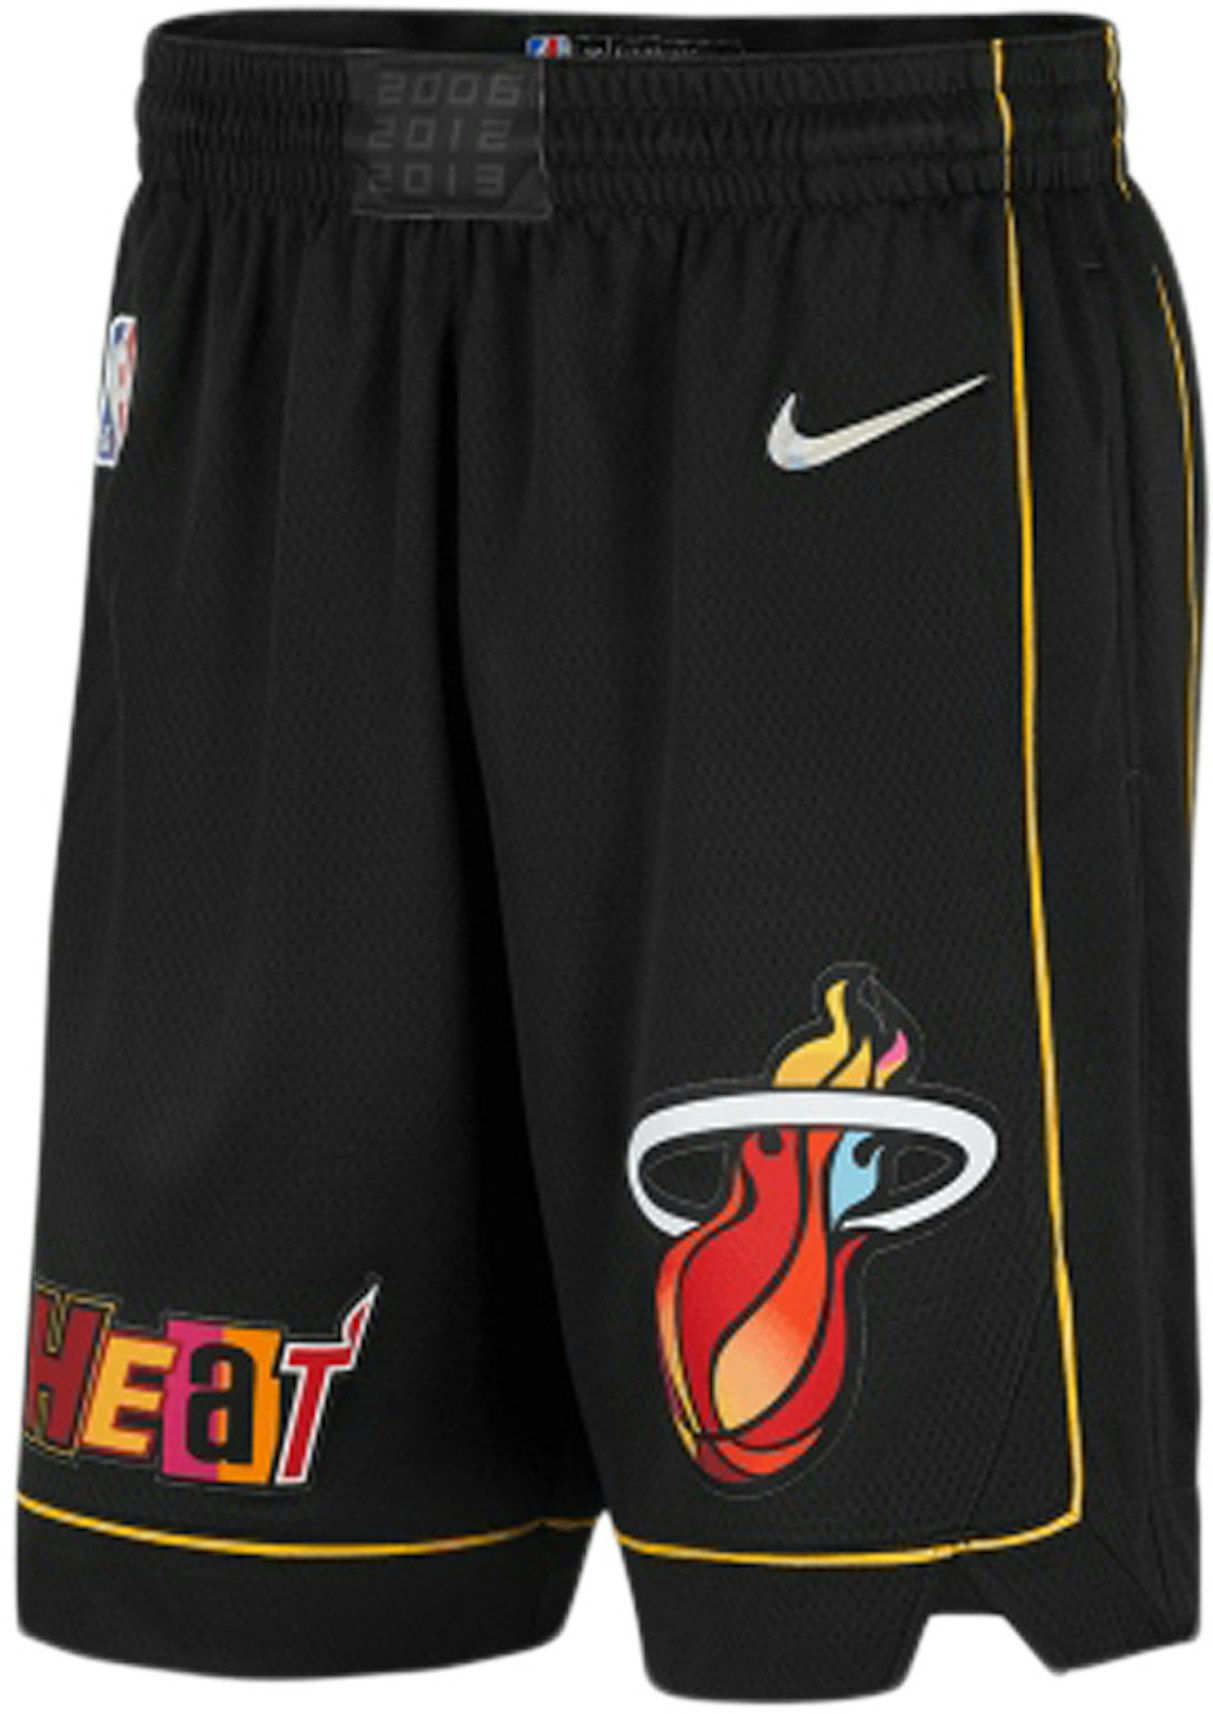 Nike NBA Miami Heat City Edition Mixtape Shorts Black Men's